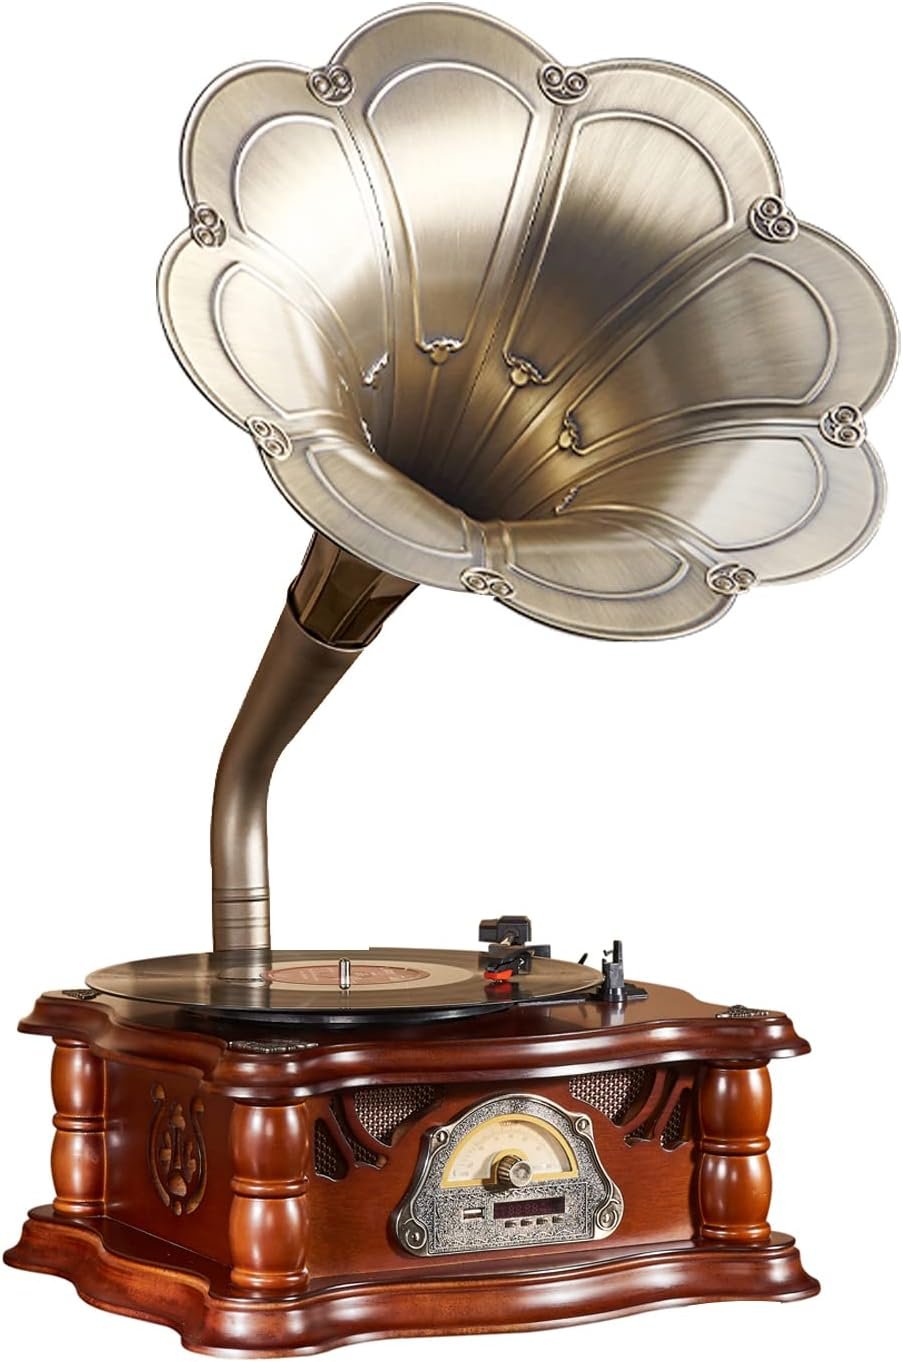 Artisam Phonograph Vinyl Record Player Review